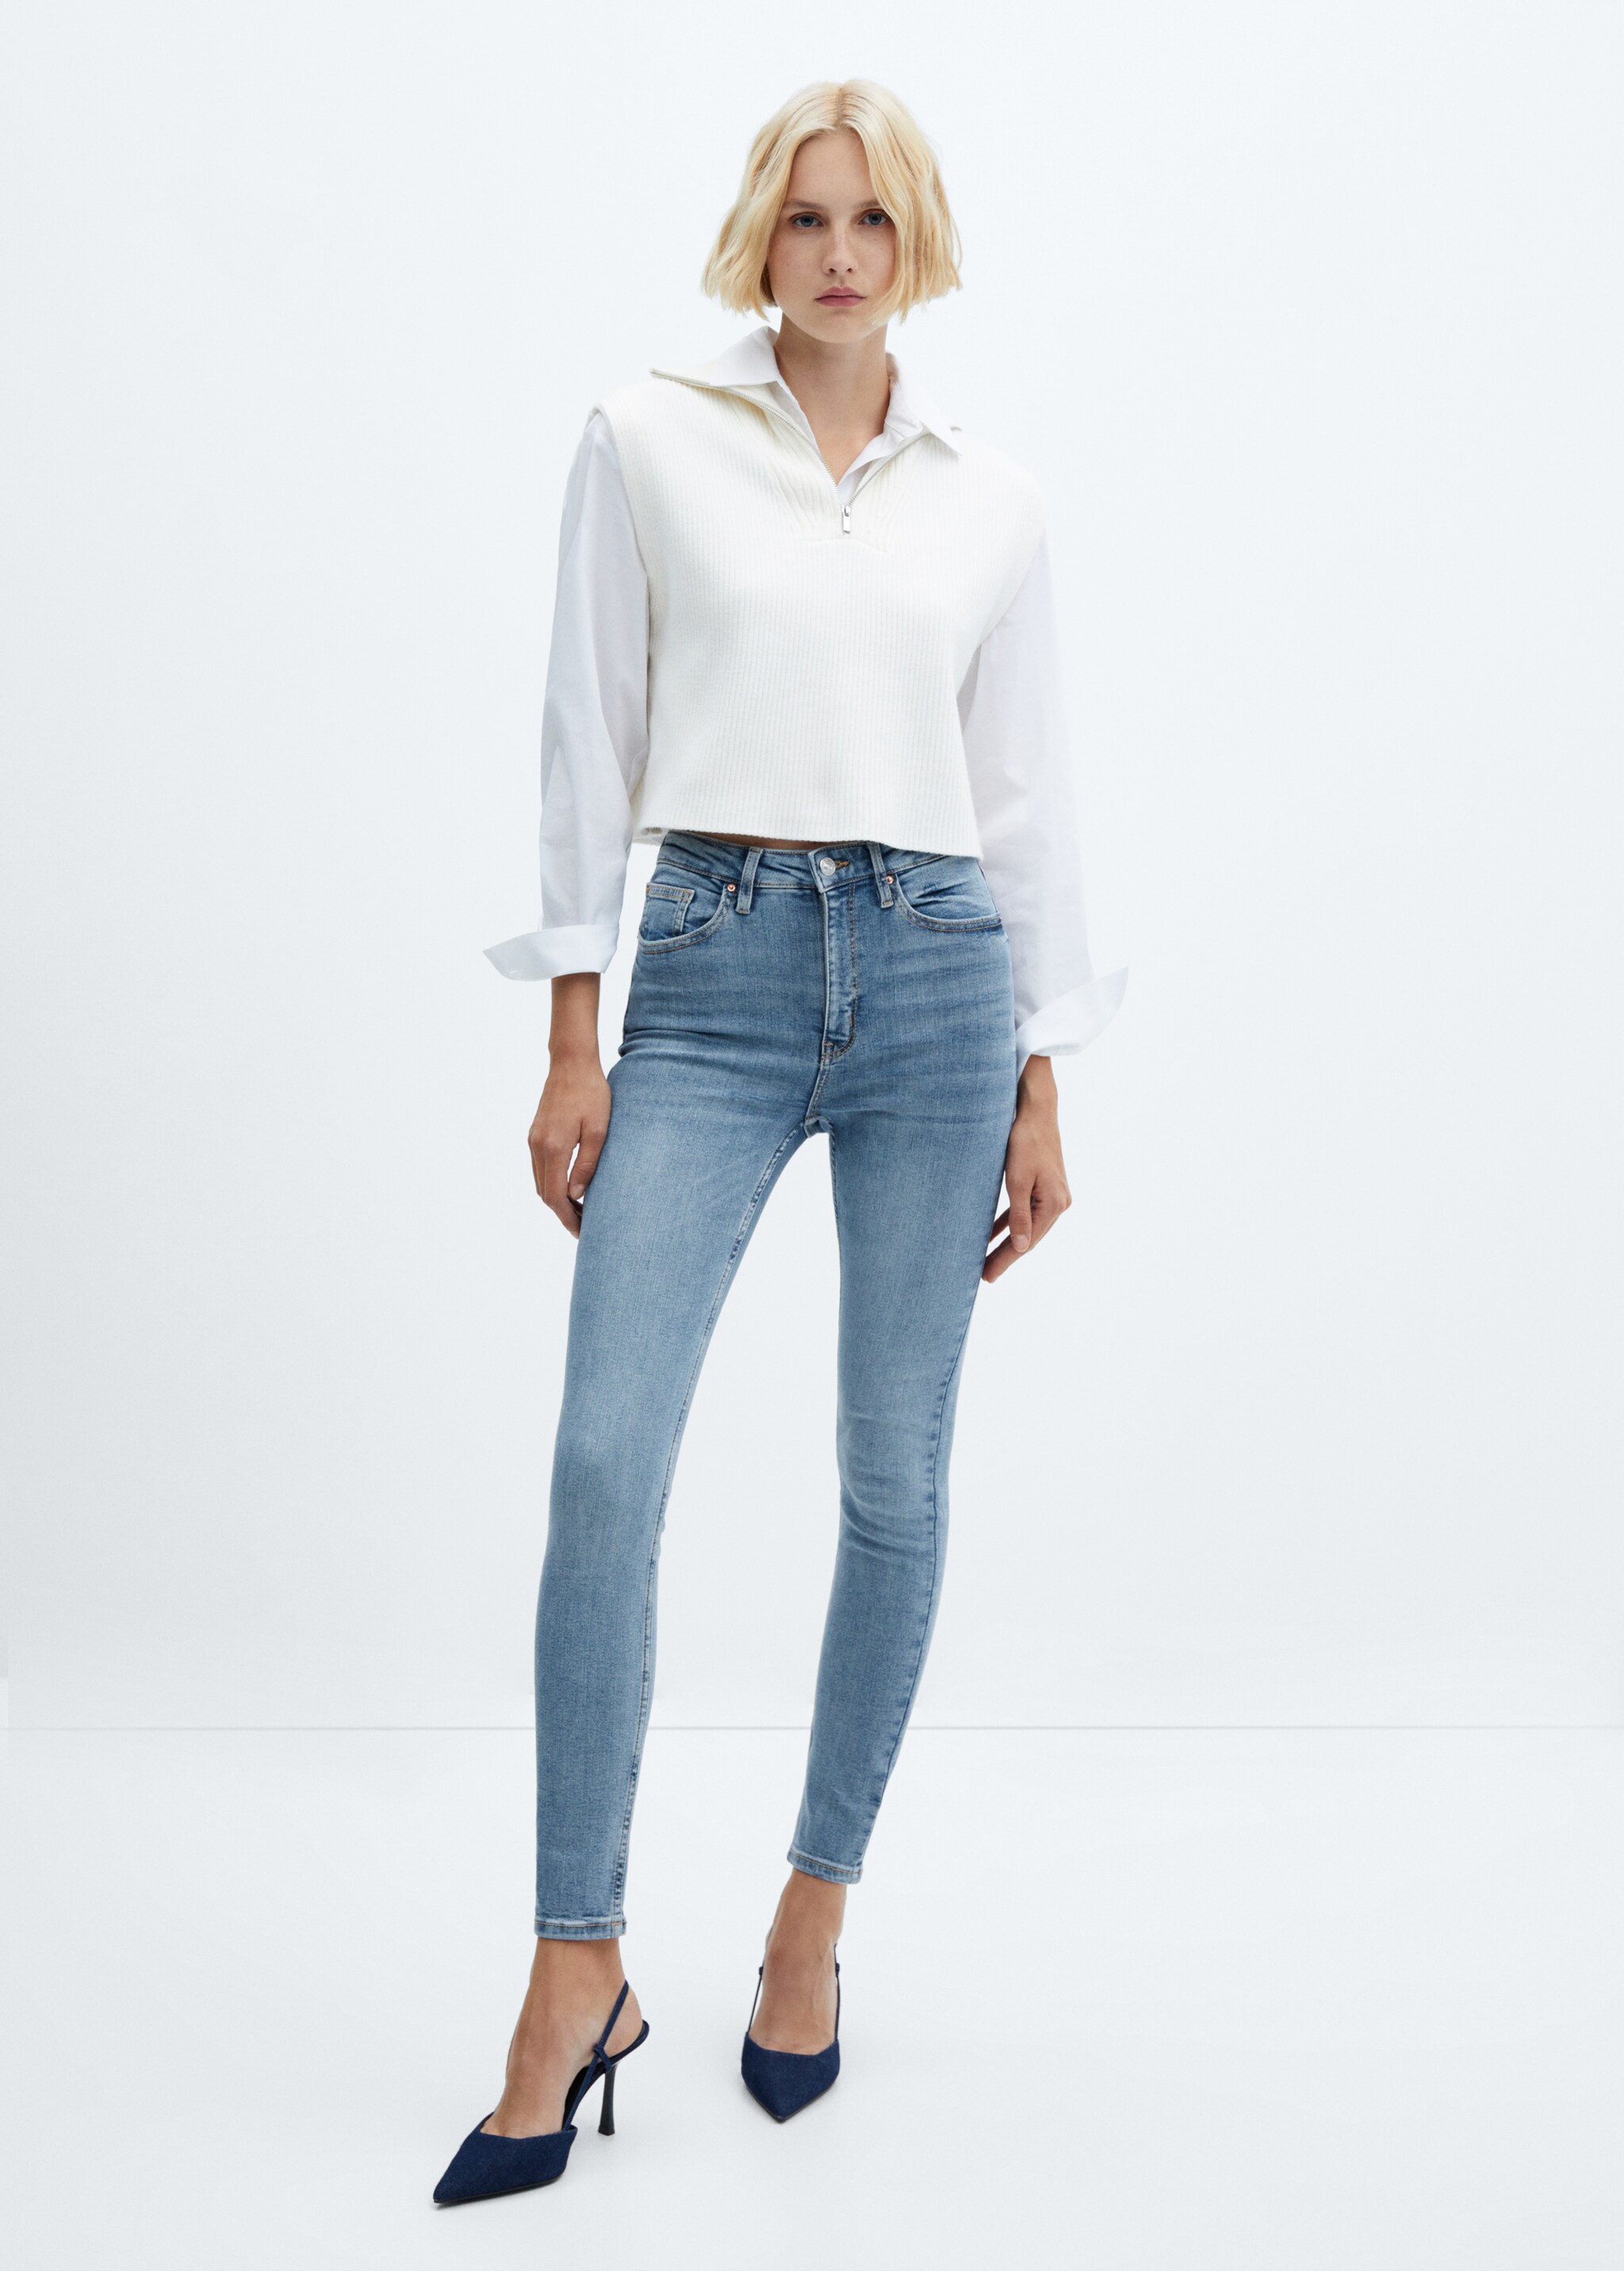 High-rise skinny jeans - Plan general